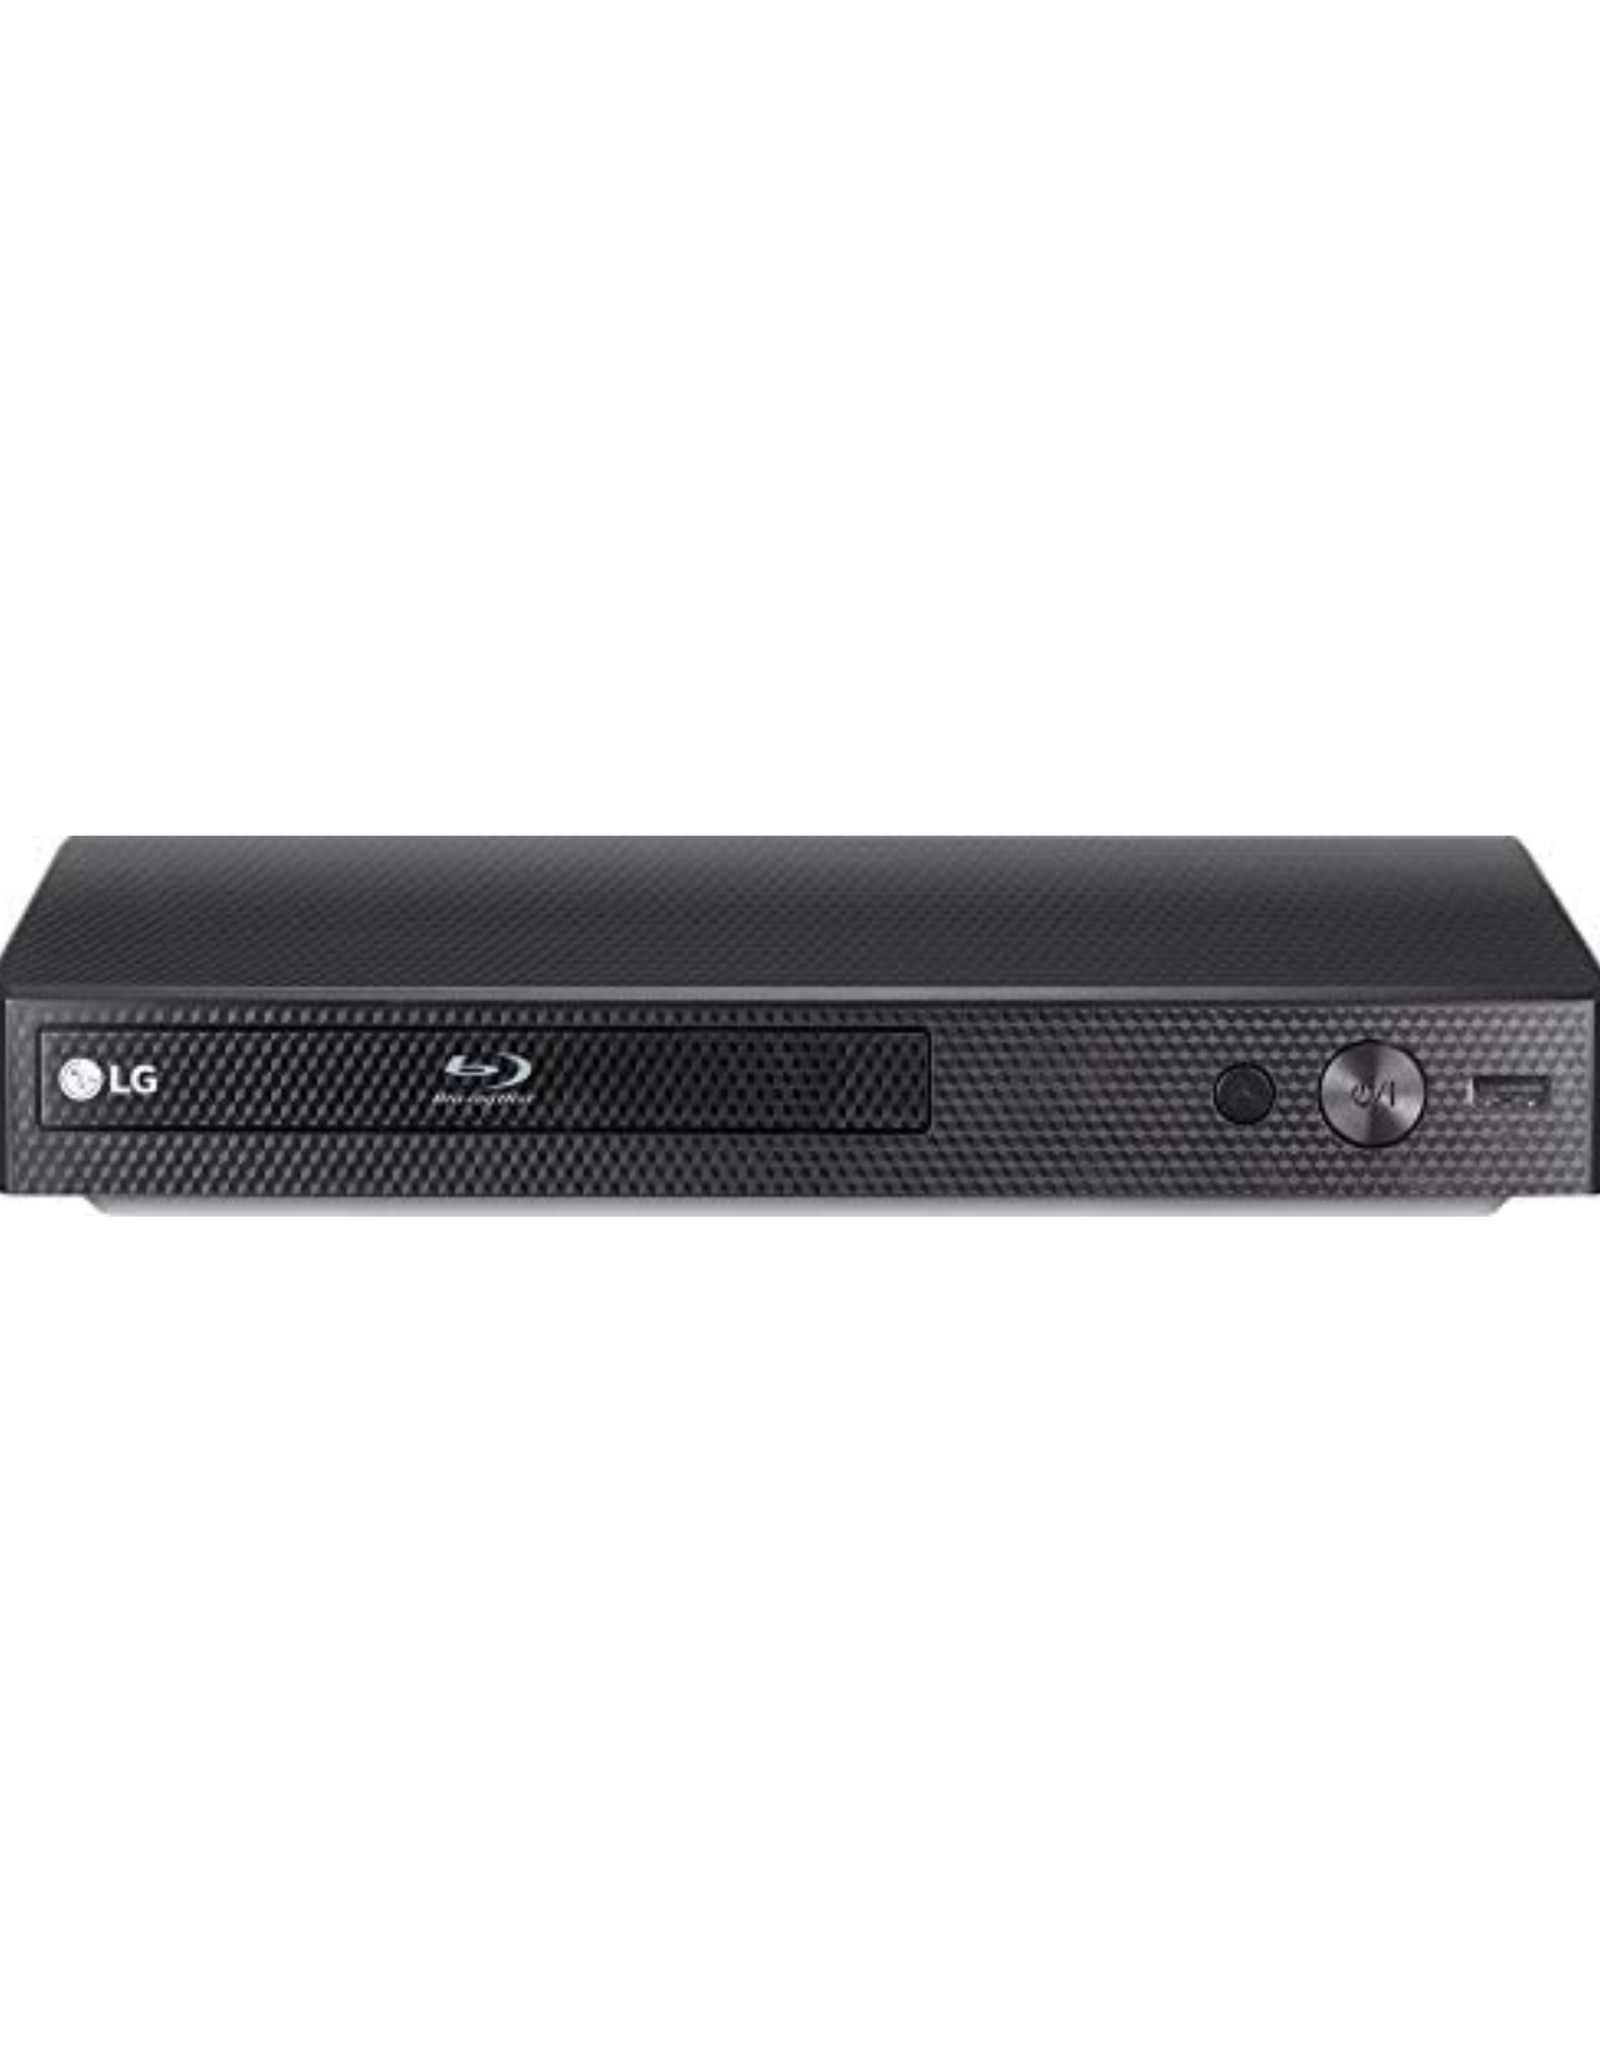 LG BP175 Region Free Blu-ray Player, 6FT HDMI Cable & Dynastar Plug Adapter Bundle